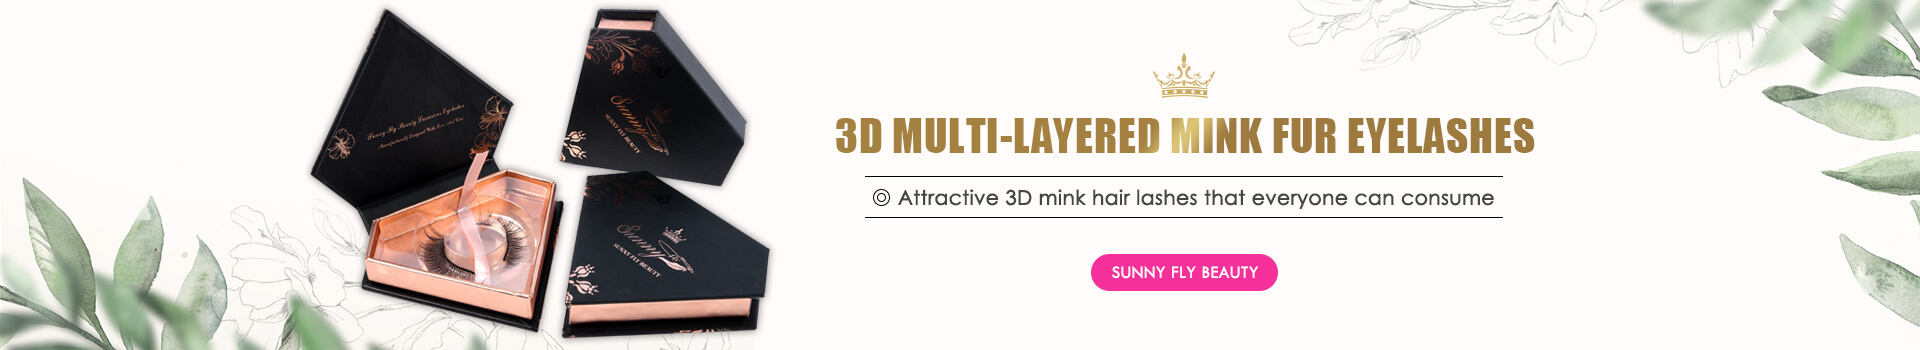 3D Multi-layered Mink Fur Eyelashes MG12